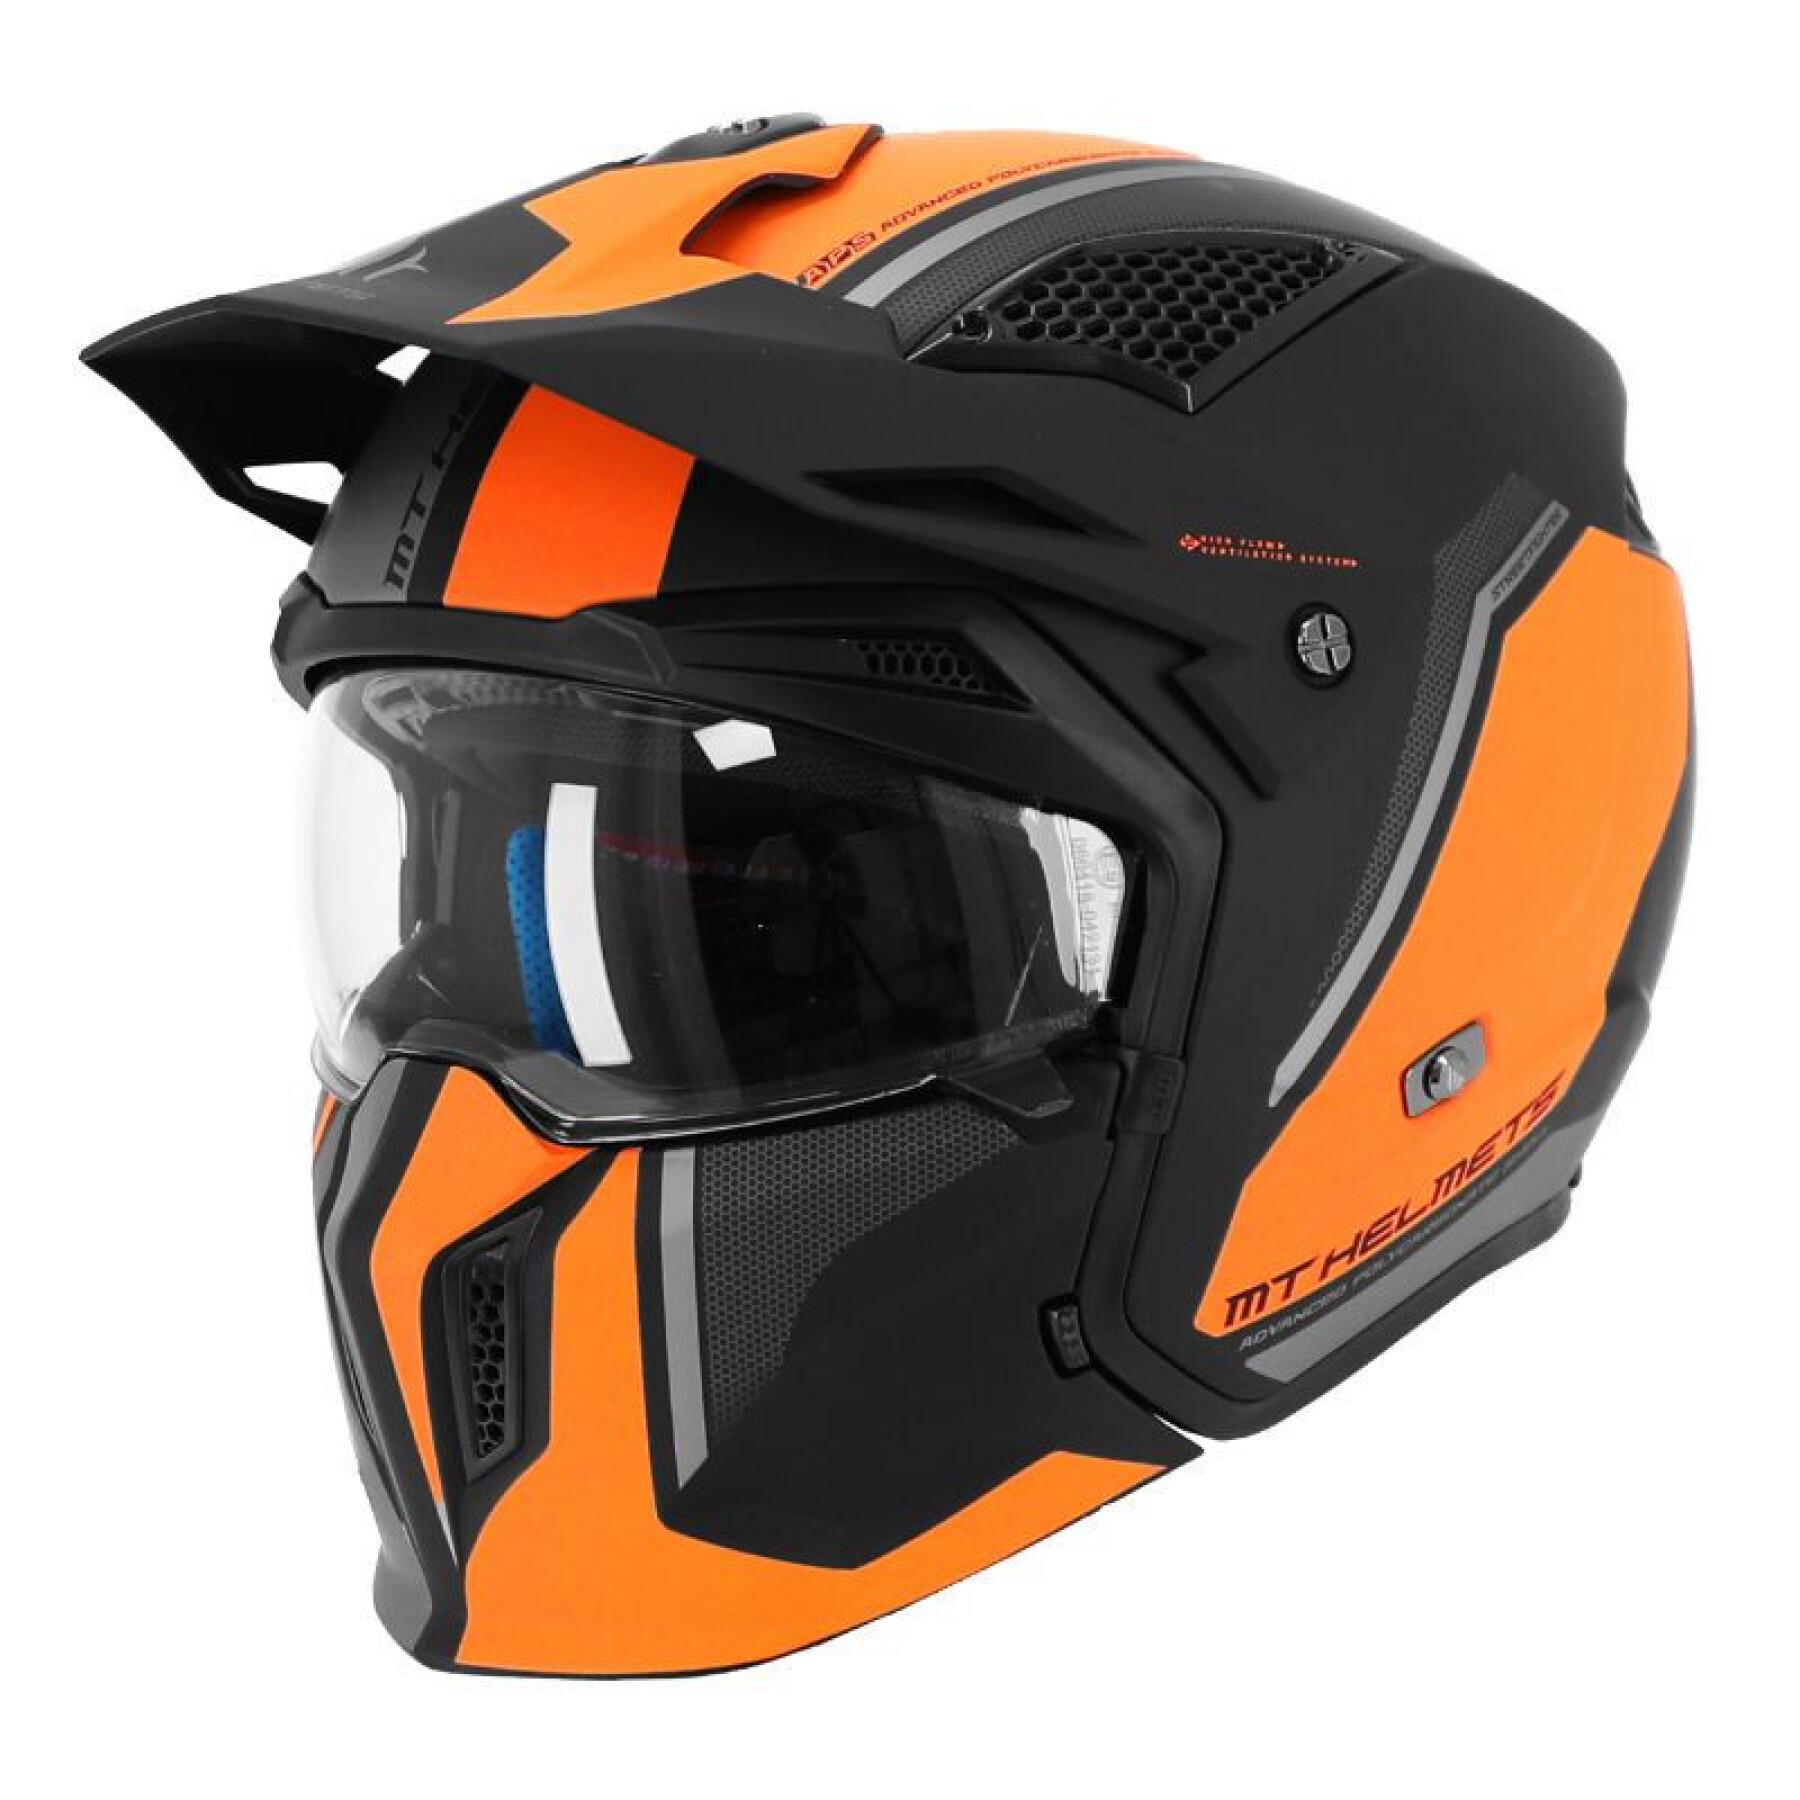 Casque moto cross simple ecran transformable avec mentonniere amovible MT Helmets Streetfighter Sv Twin C4 (Ece 22.06)